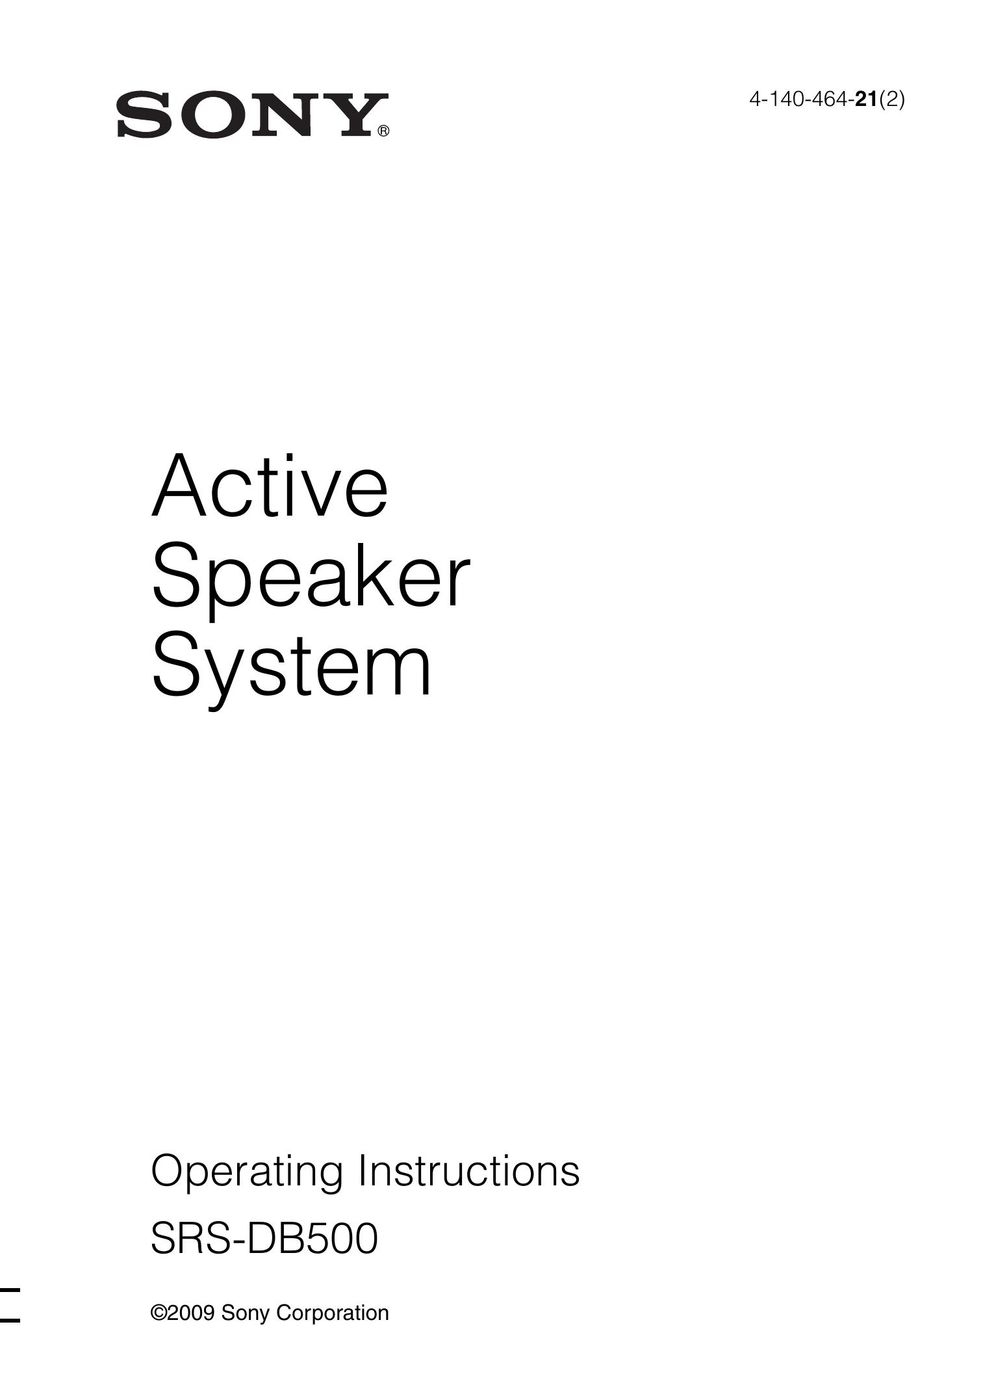 Sony 4-140-464-21(2) Speaker System User Manual